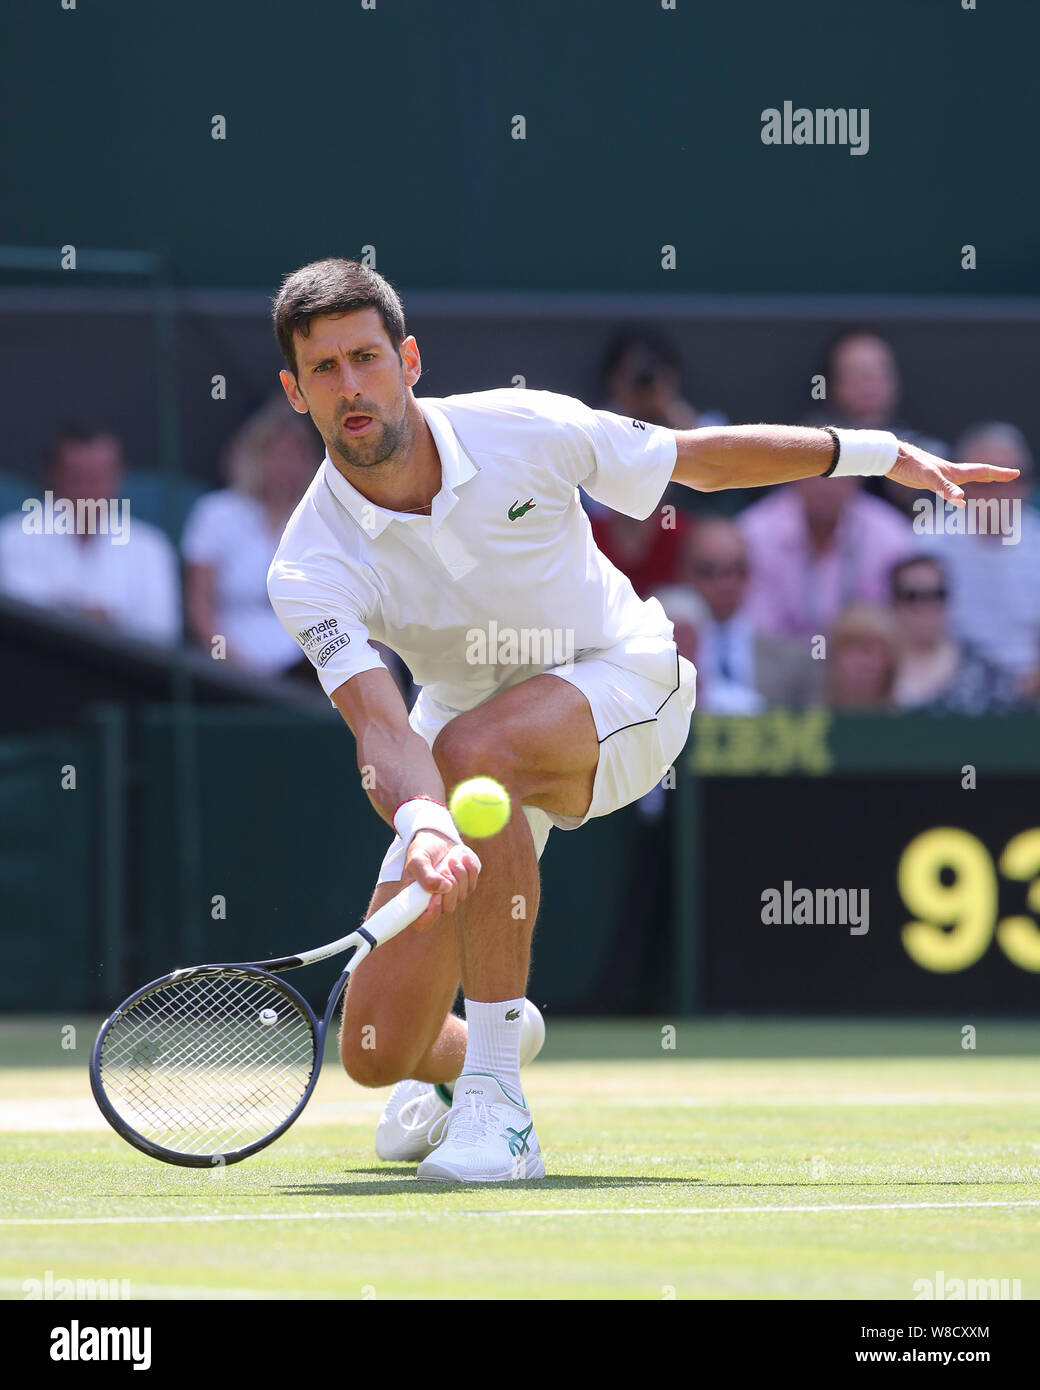 Serbian tennis player Novak Djokovic playing forehand shot during 2019 Wimbledon Championships, London, England, United Kingdom Stock Photo